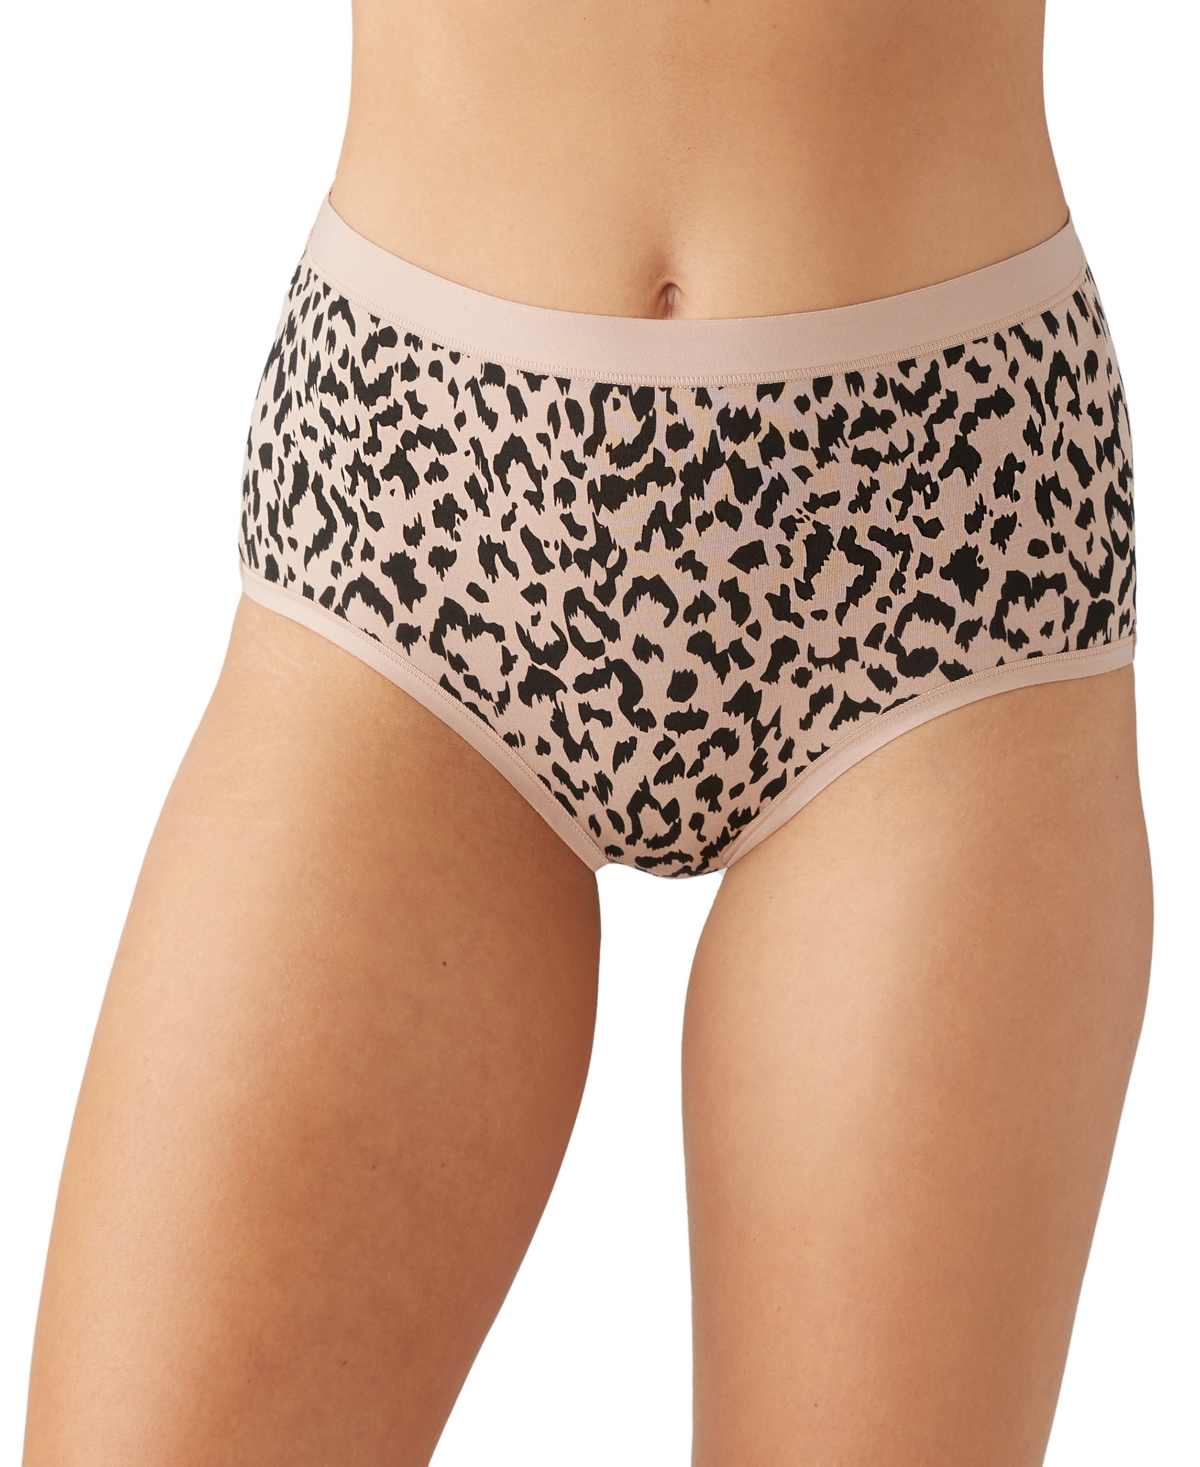 Wacoal Women's Understated Cotton Bikini Underwear 870362